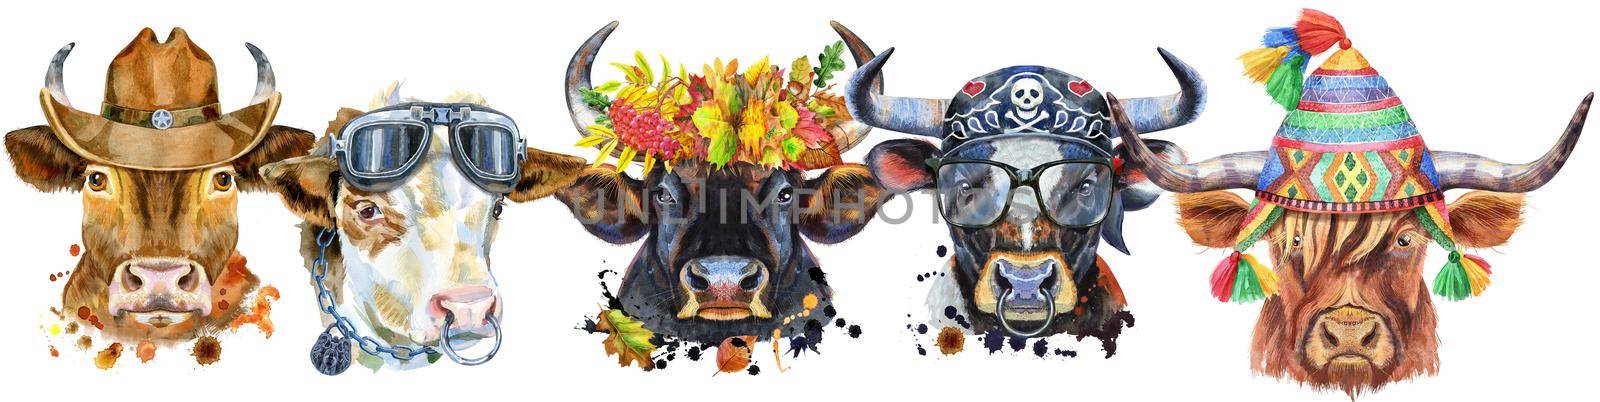 Cute border from watercolor portraits of bulls. For t-shirt graphics. Watercolor bulls illustration